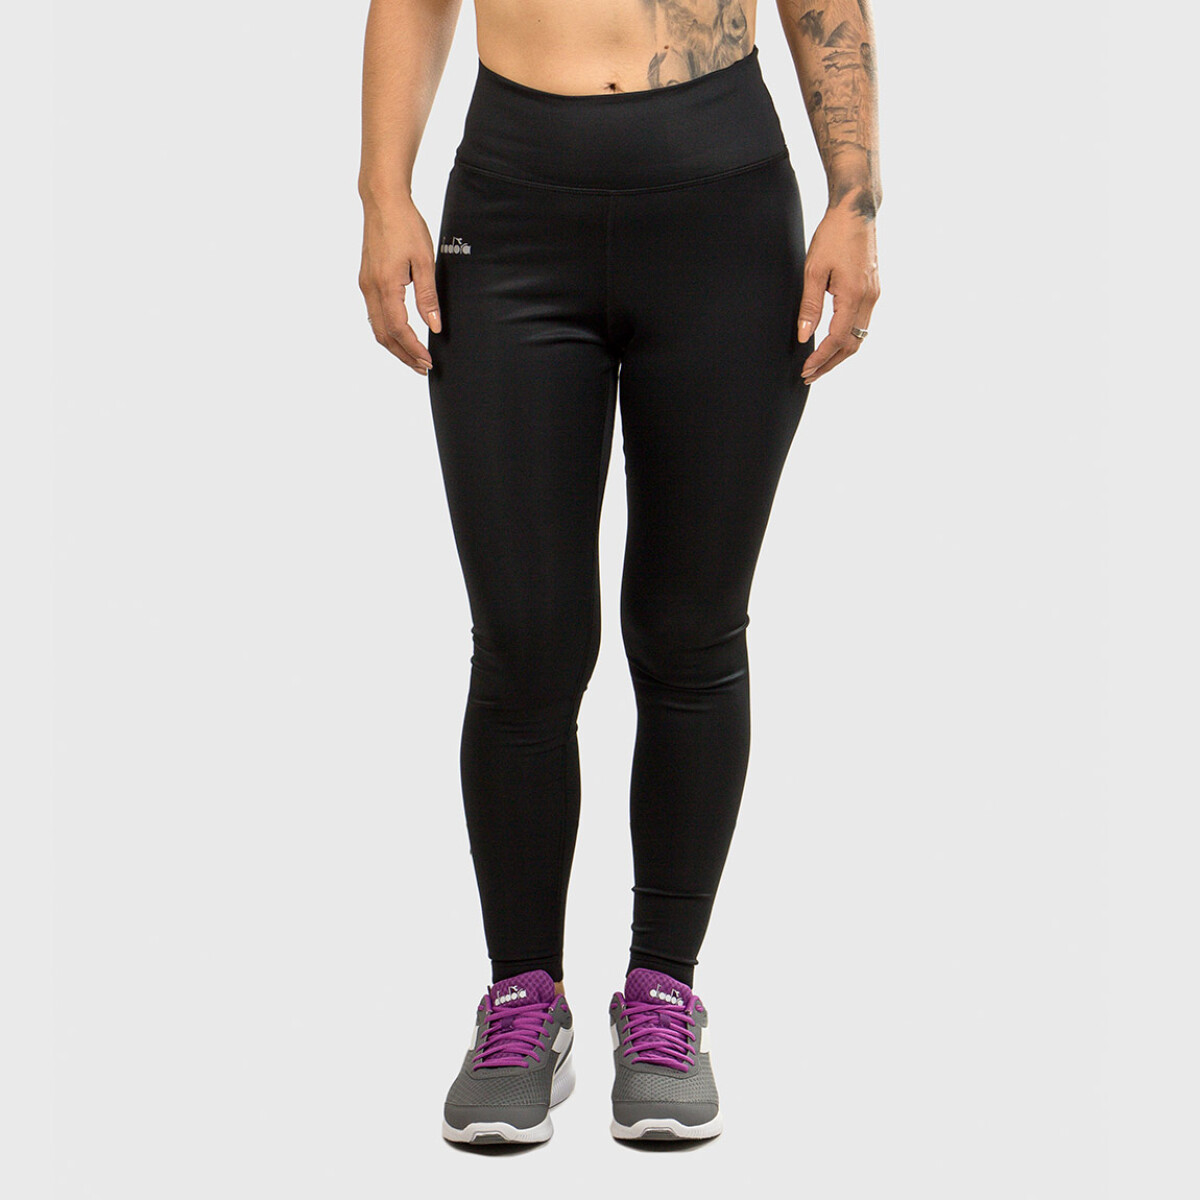 Diadora Dama Sport Pantalon Ladies Dry Fit Tight -black - Negro 